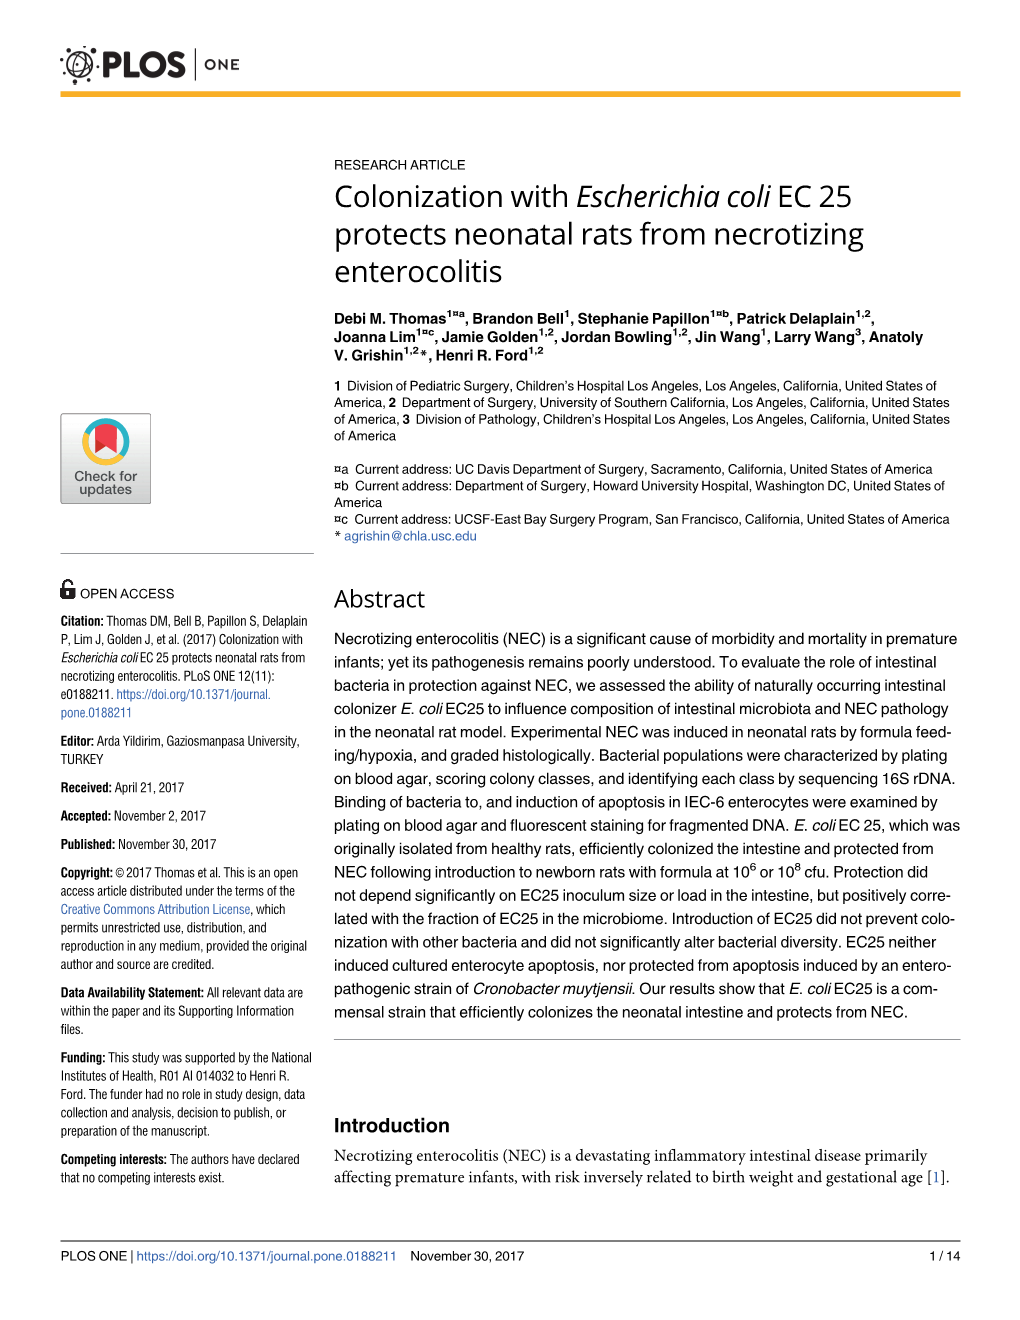 Colonization with Escherichia Coli EC 25 Protects Neonatal Rats from Necrotizing Enterocolitis